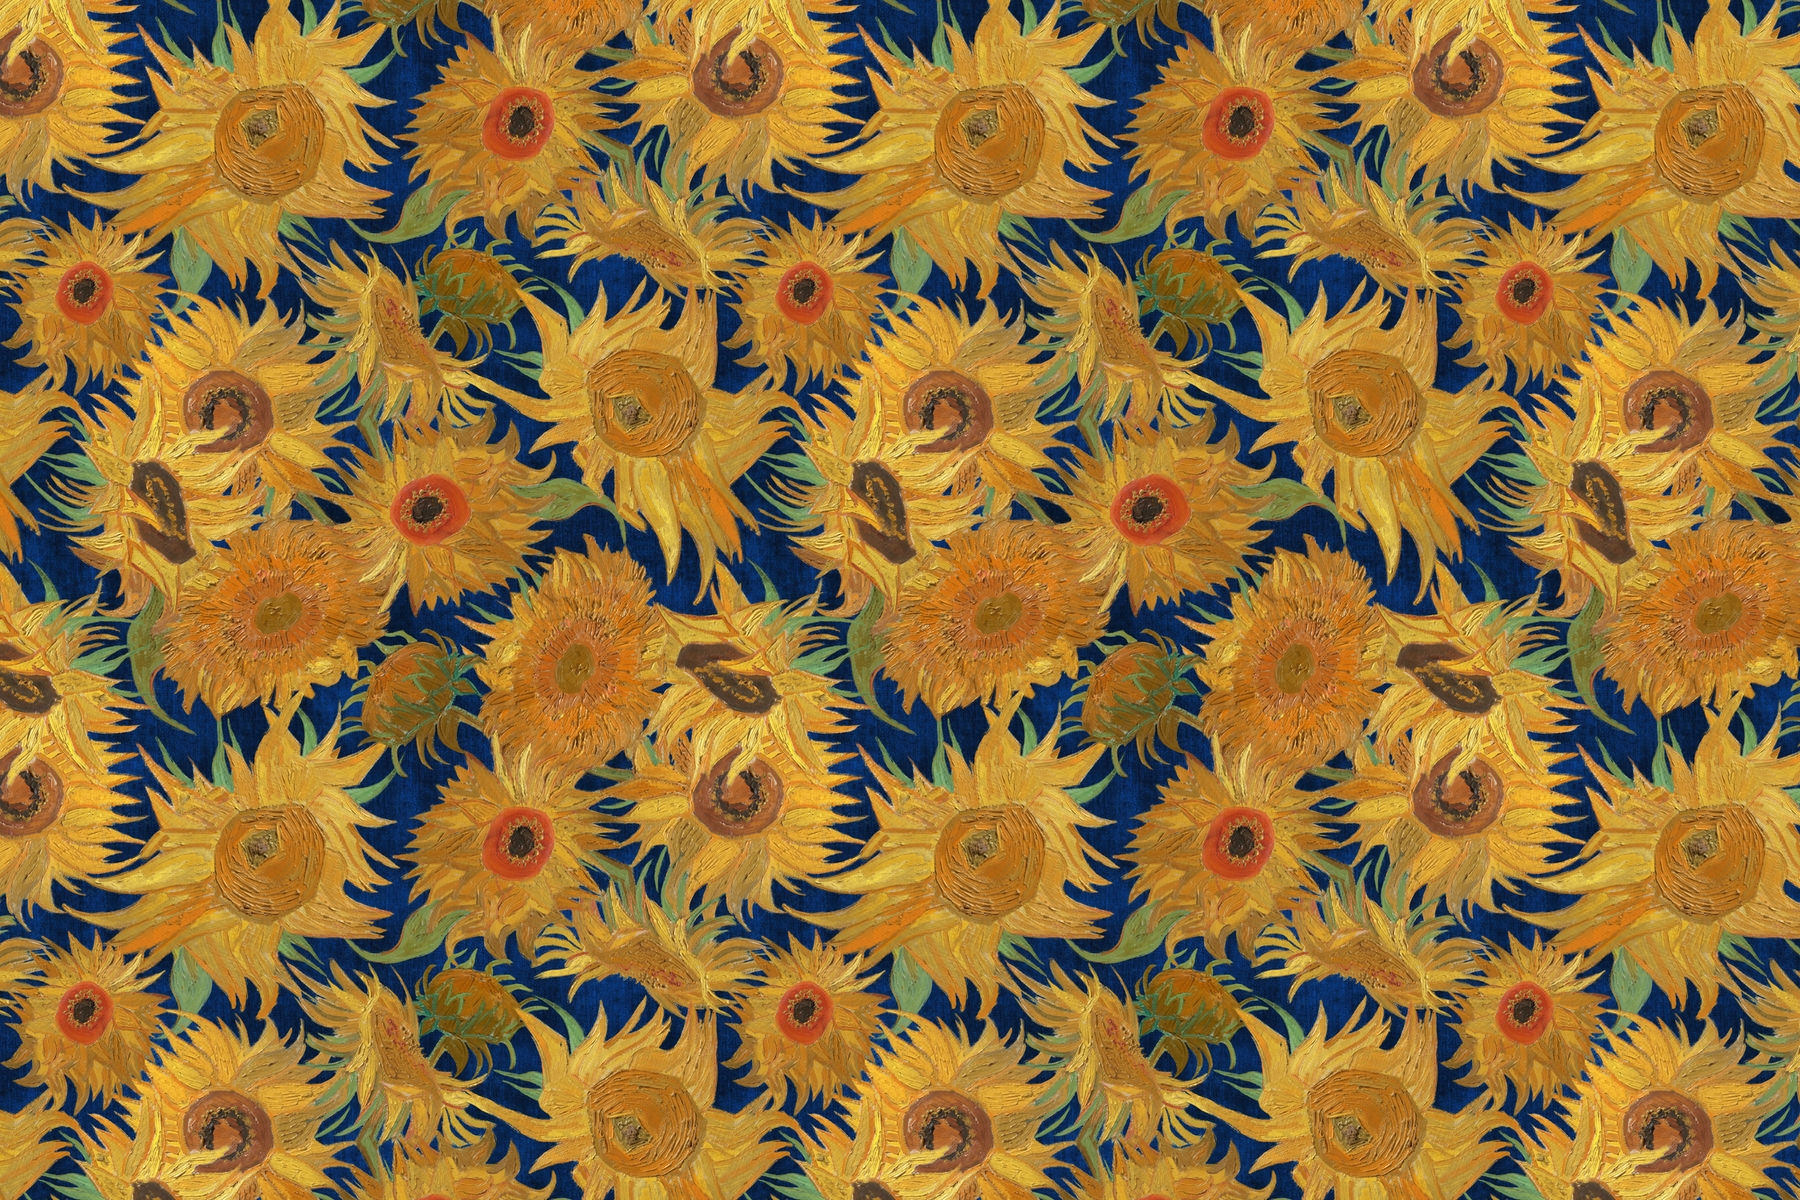 Buy Van Gogh Sunflowers indigo wallpaper - Free US shipping at